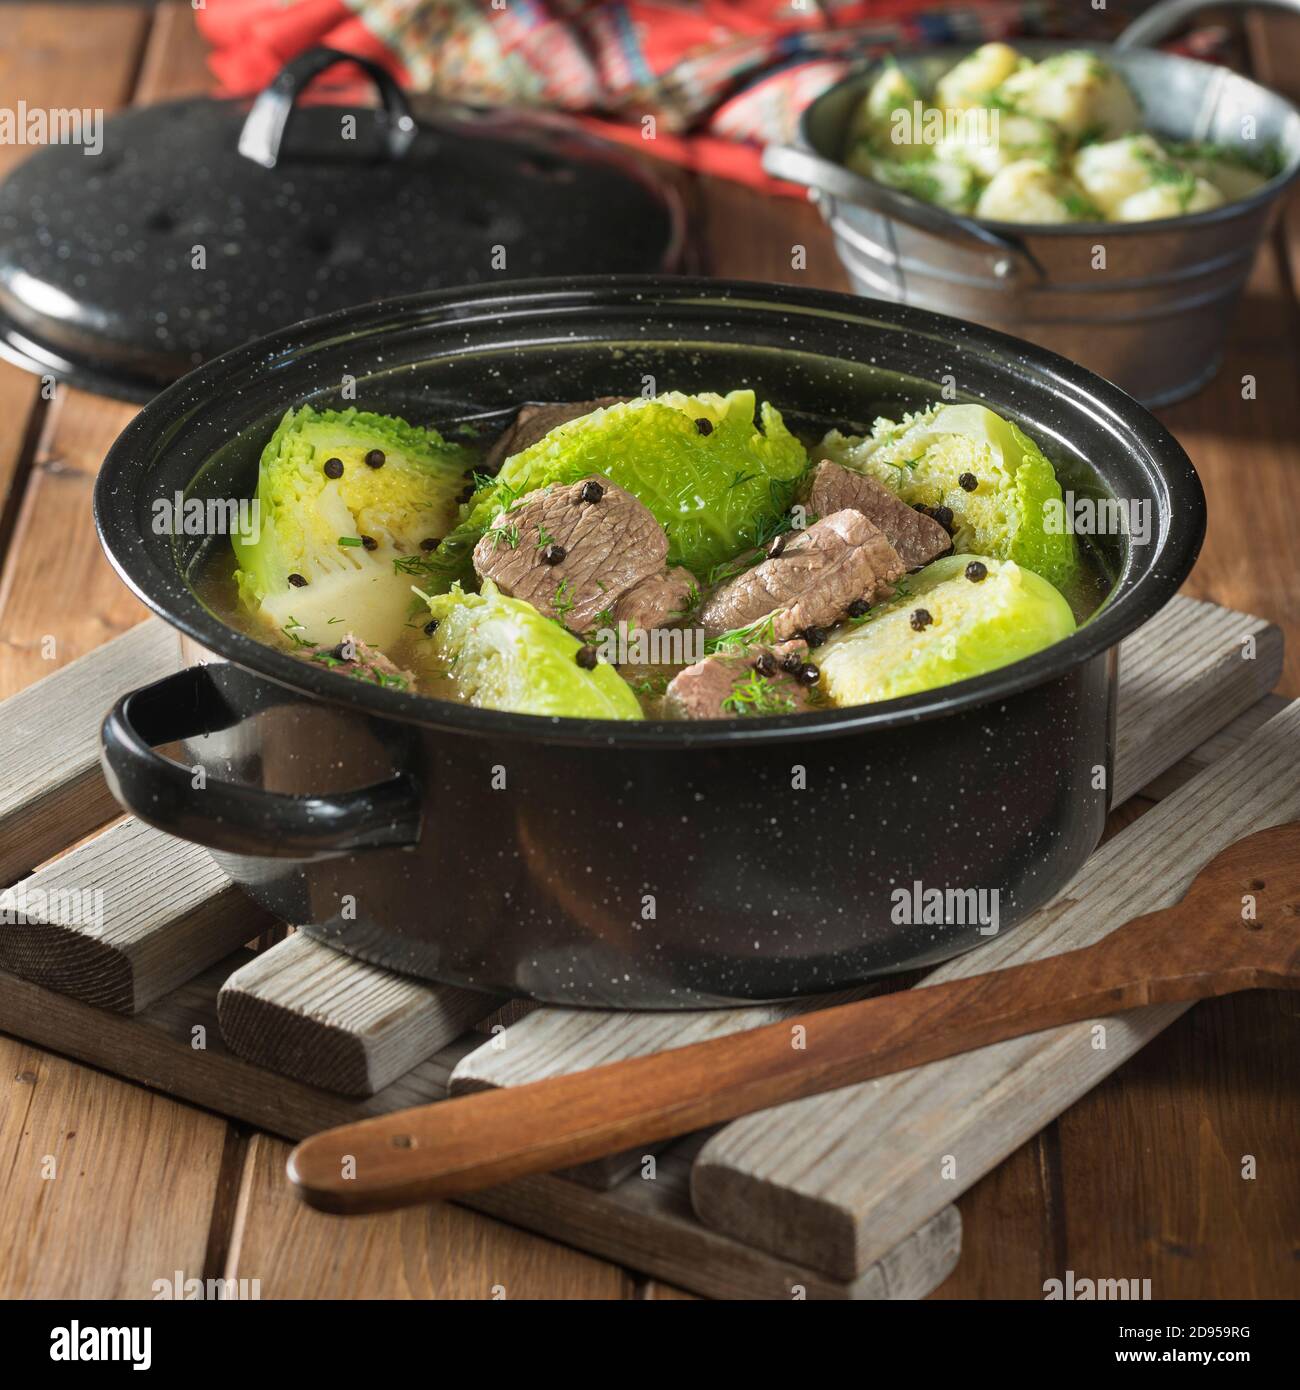 Fårikål. Lamb and cabbage stew. Norway Food Stock Photo